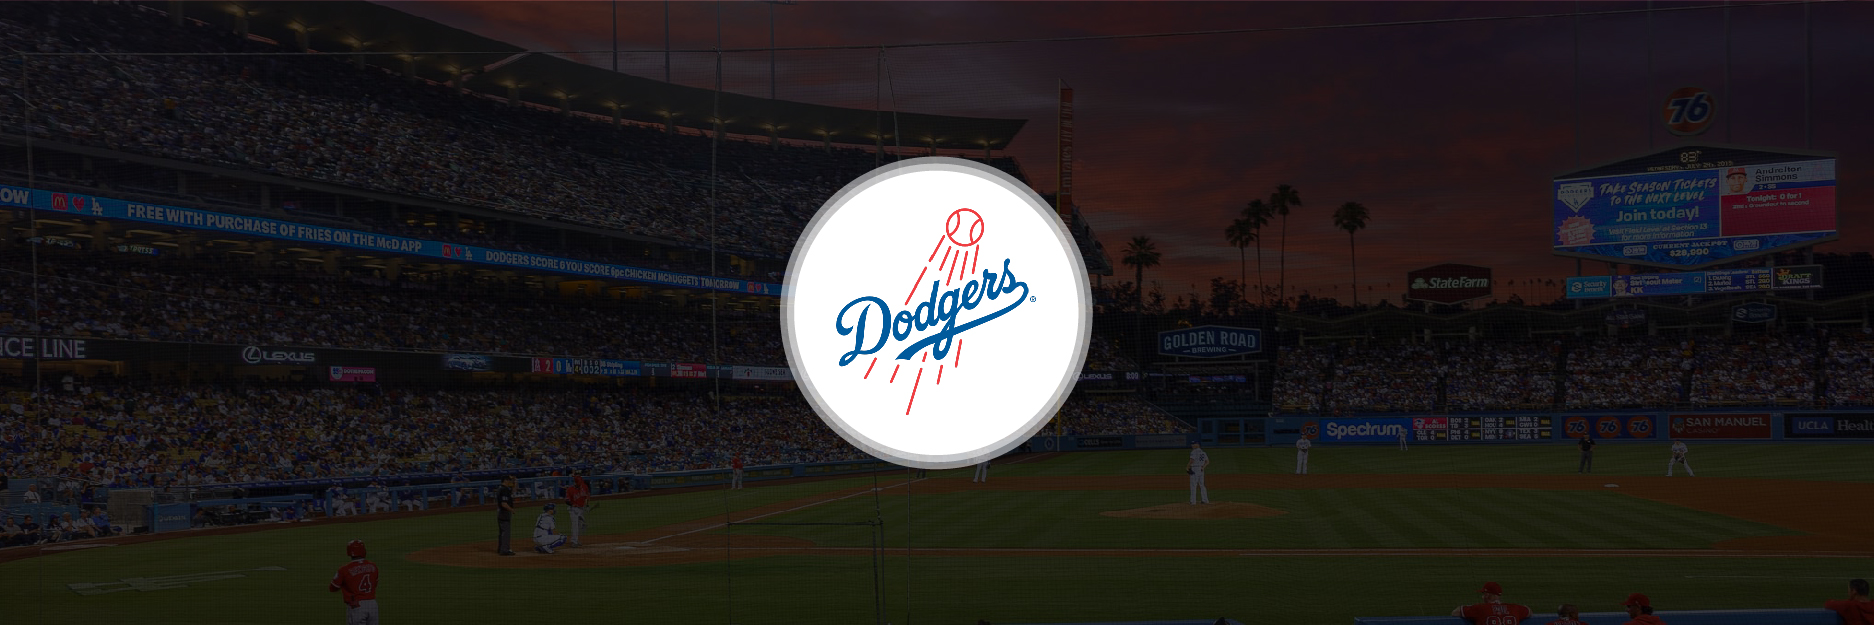 Los Angeles Dodgers Analysis Before 2020 Season Start